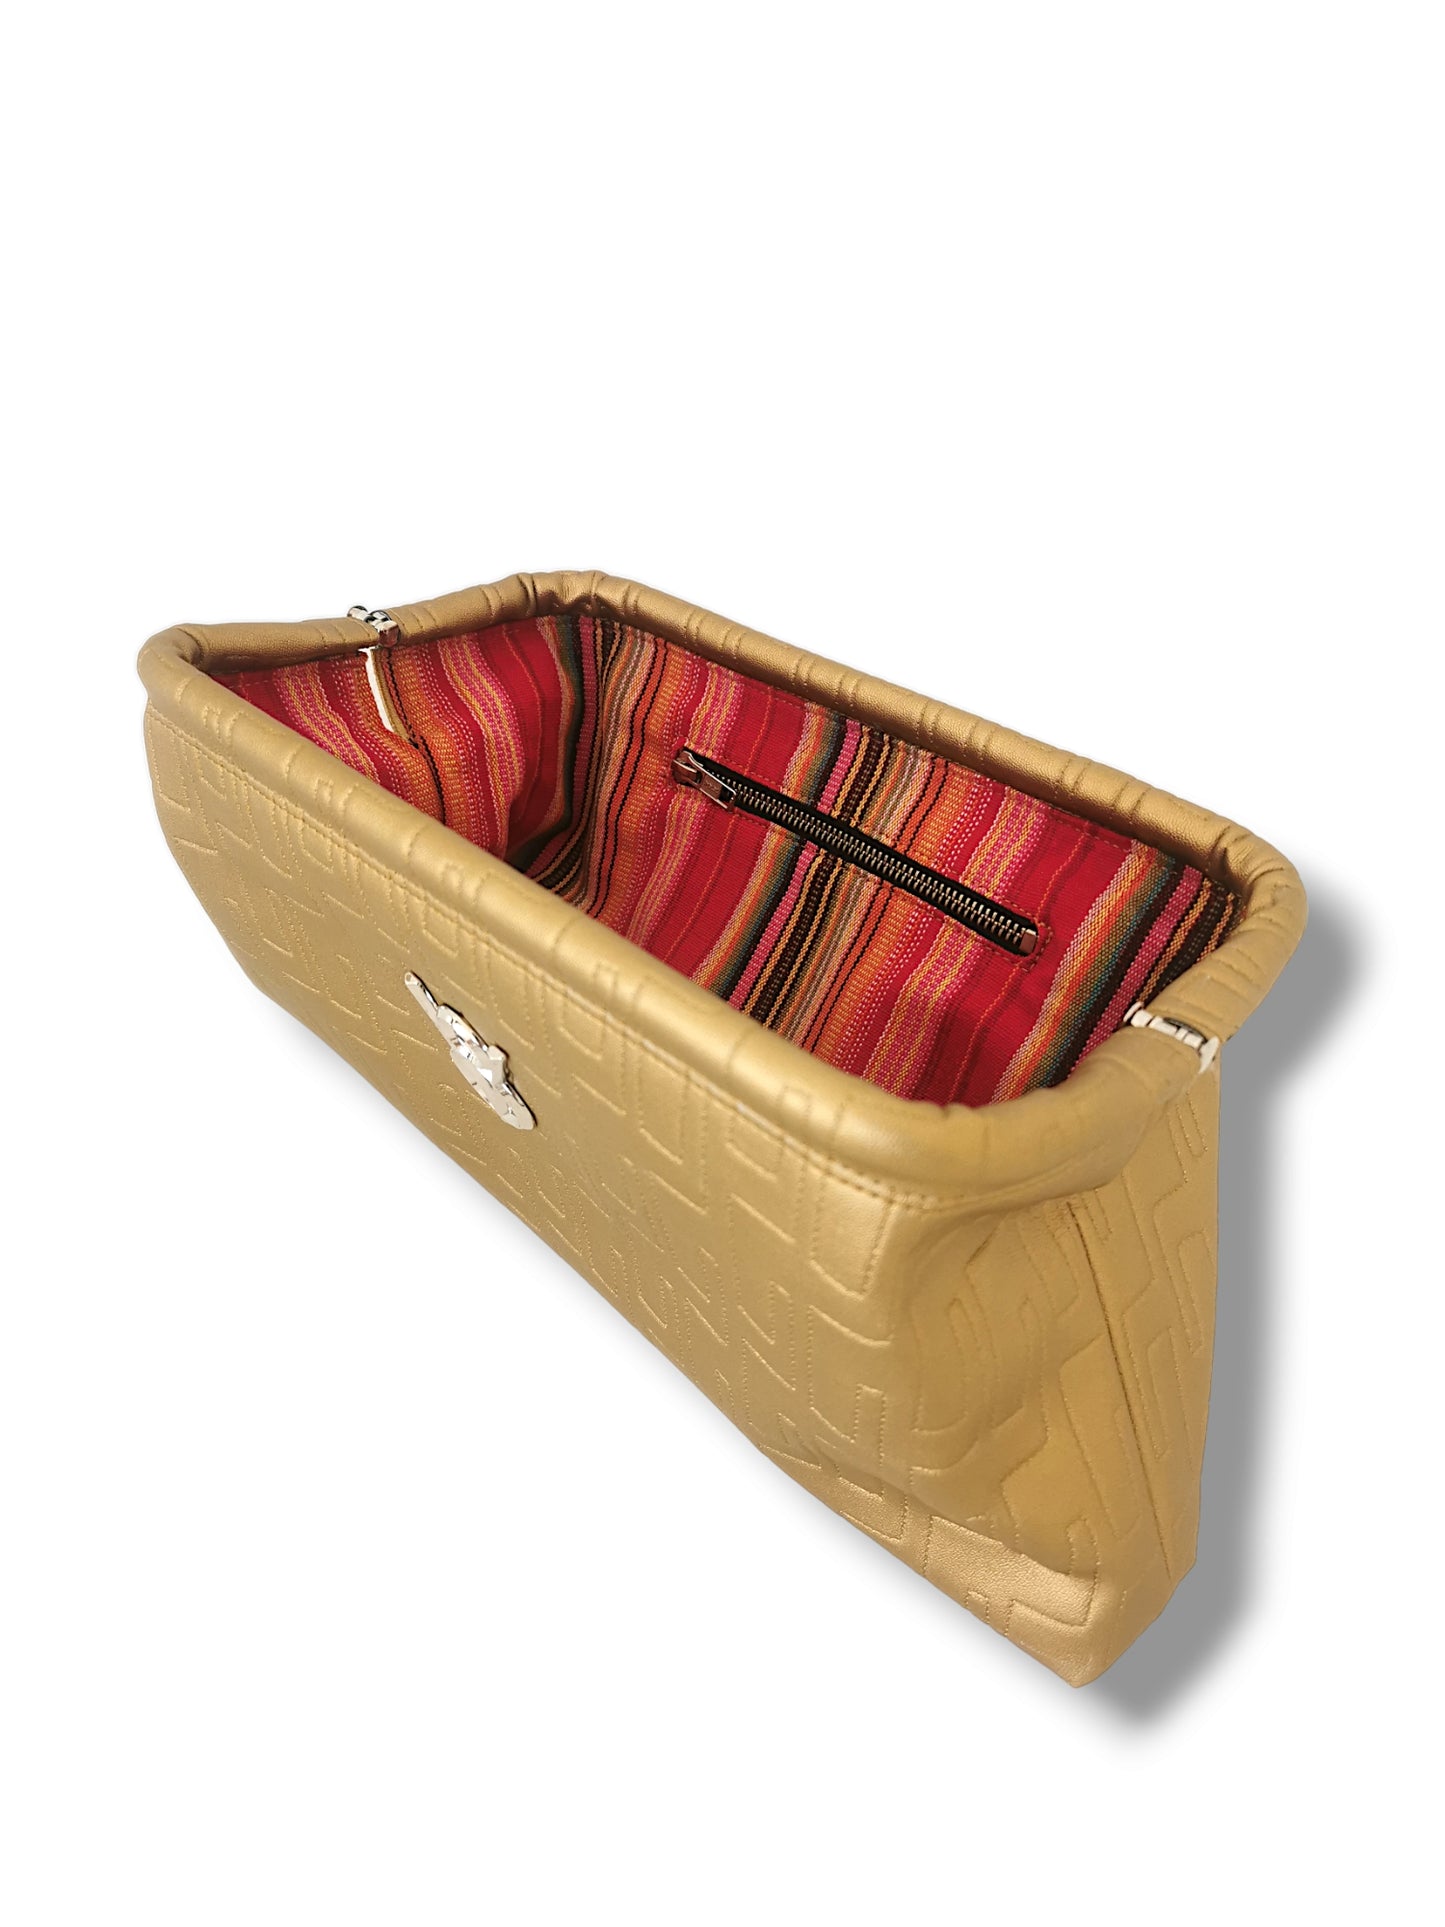 Dita V8 Clutch Bag - Atomic Gold / Red Stripe Lining